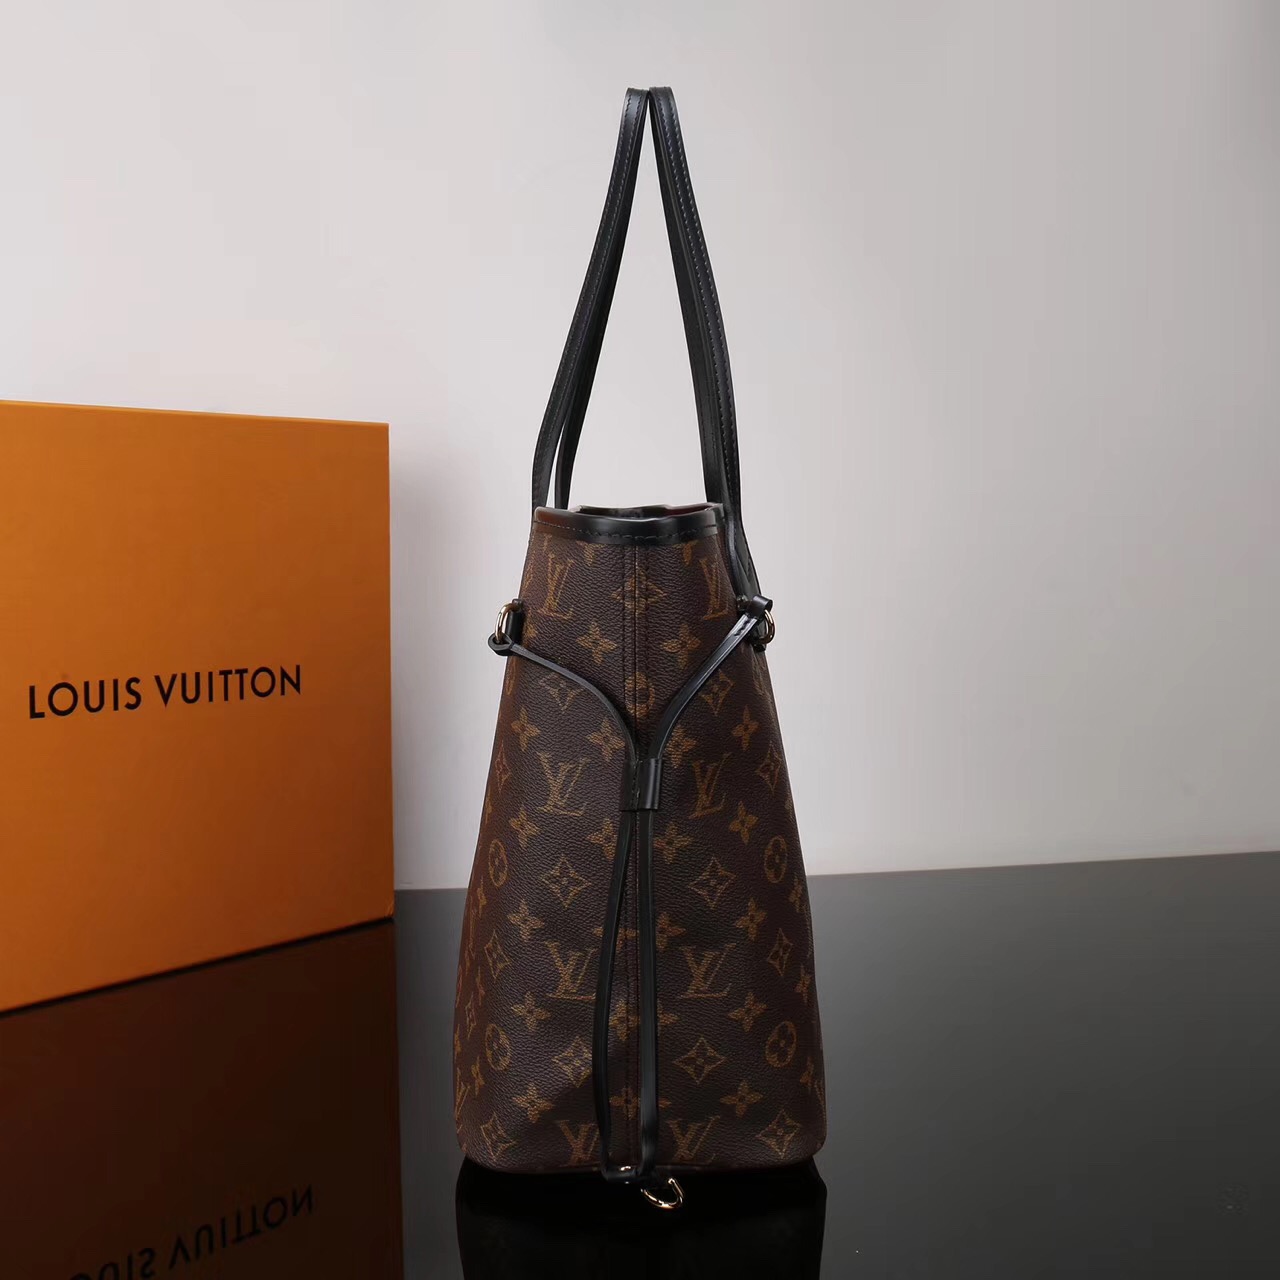 LV Louis Vuitton Neverfull Medium M48288 MM bags Monogram [LV1032] - $329.00 Luxury